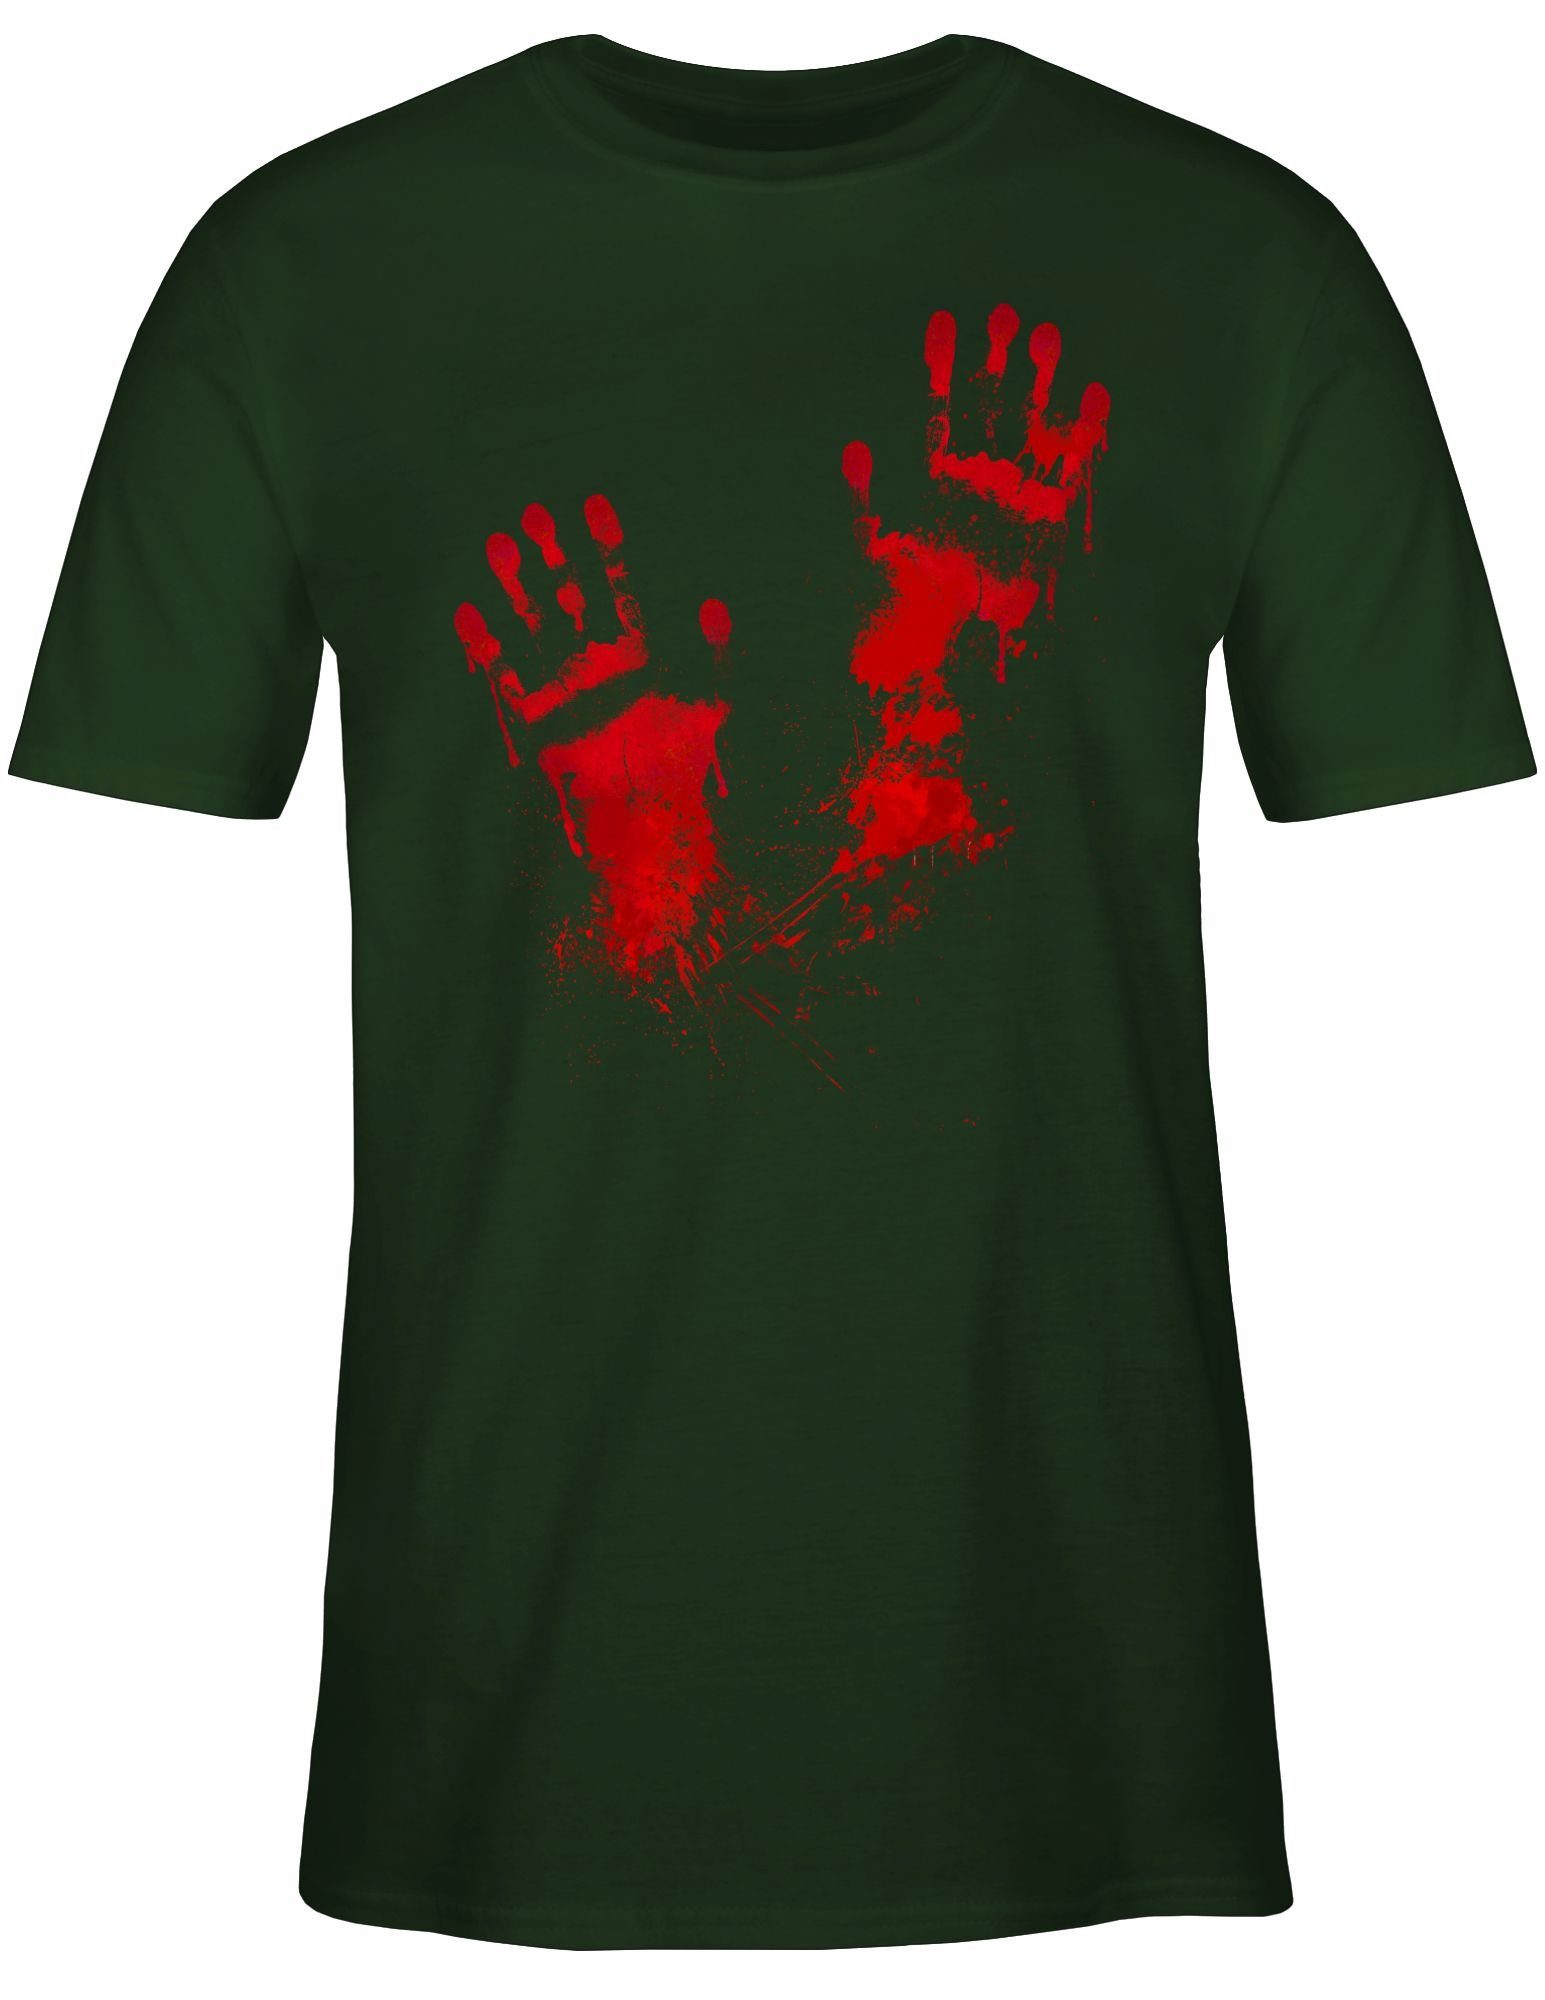 Handabdrücke Blutige Kostüme T-Shirt Herren Shirtracer Halloween Blut Handabdruck 03 Dunkelgrün Gruselig